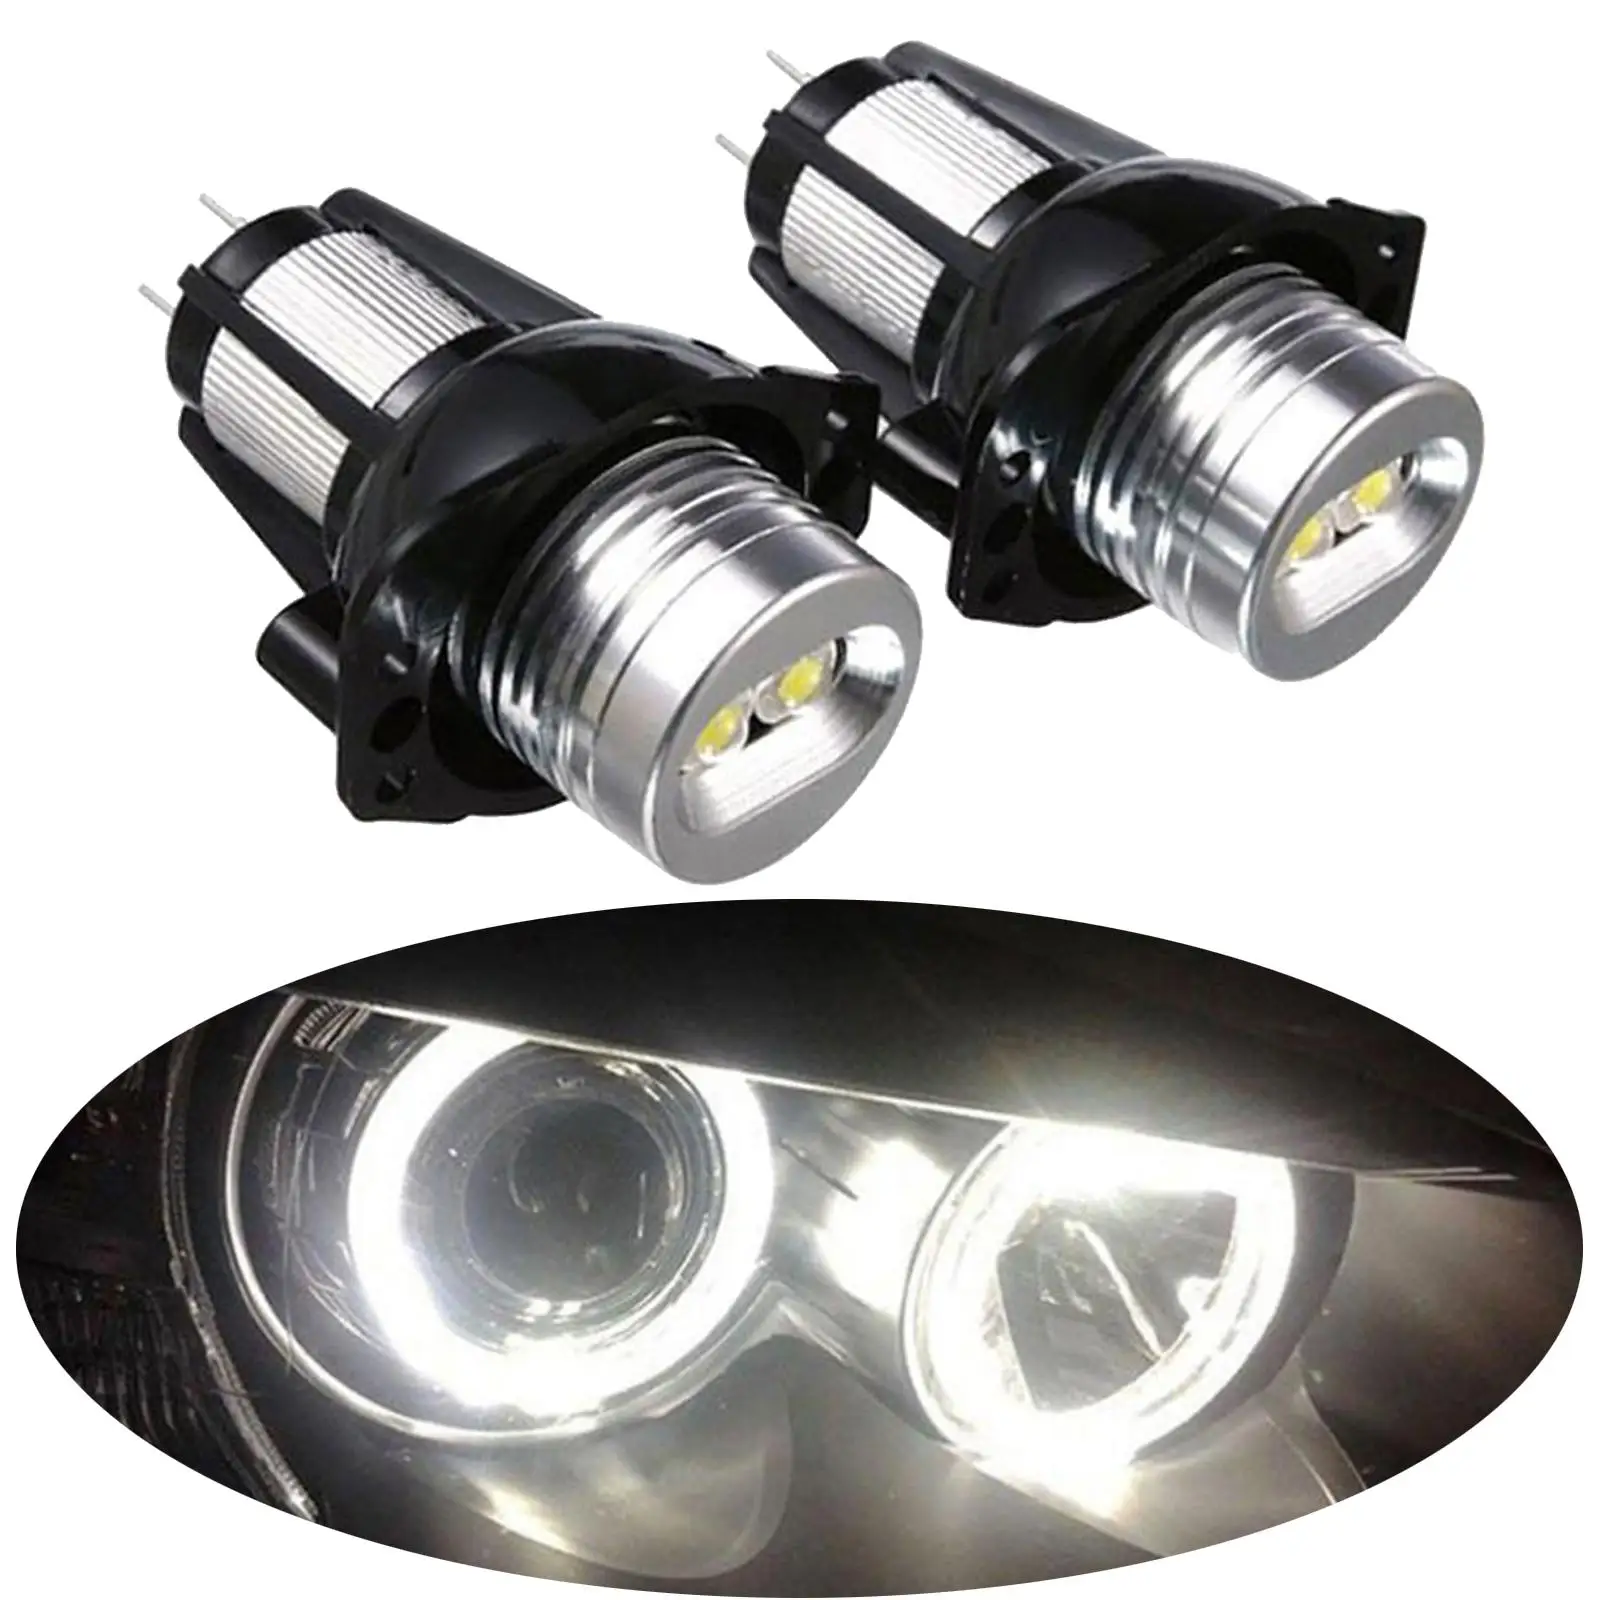 2 Piece LED High Power Angel Eyes Light Bulb 12W 12V Compatible with  E90 E91 05-08